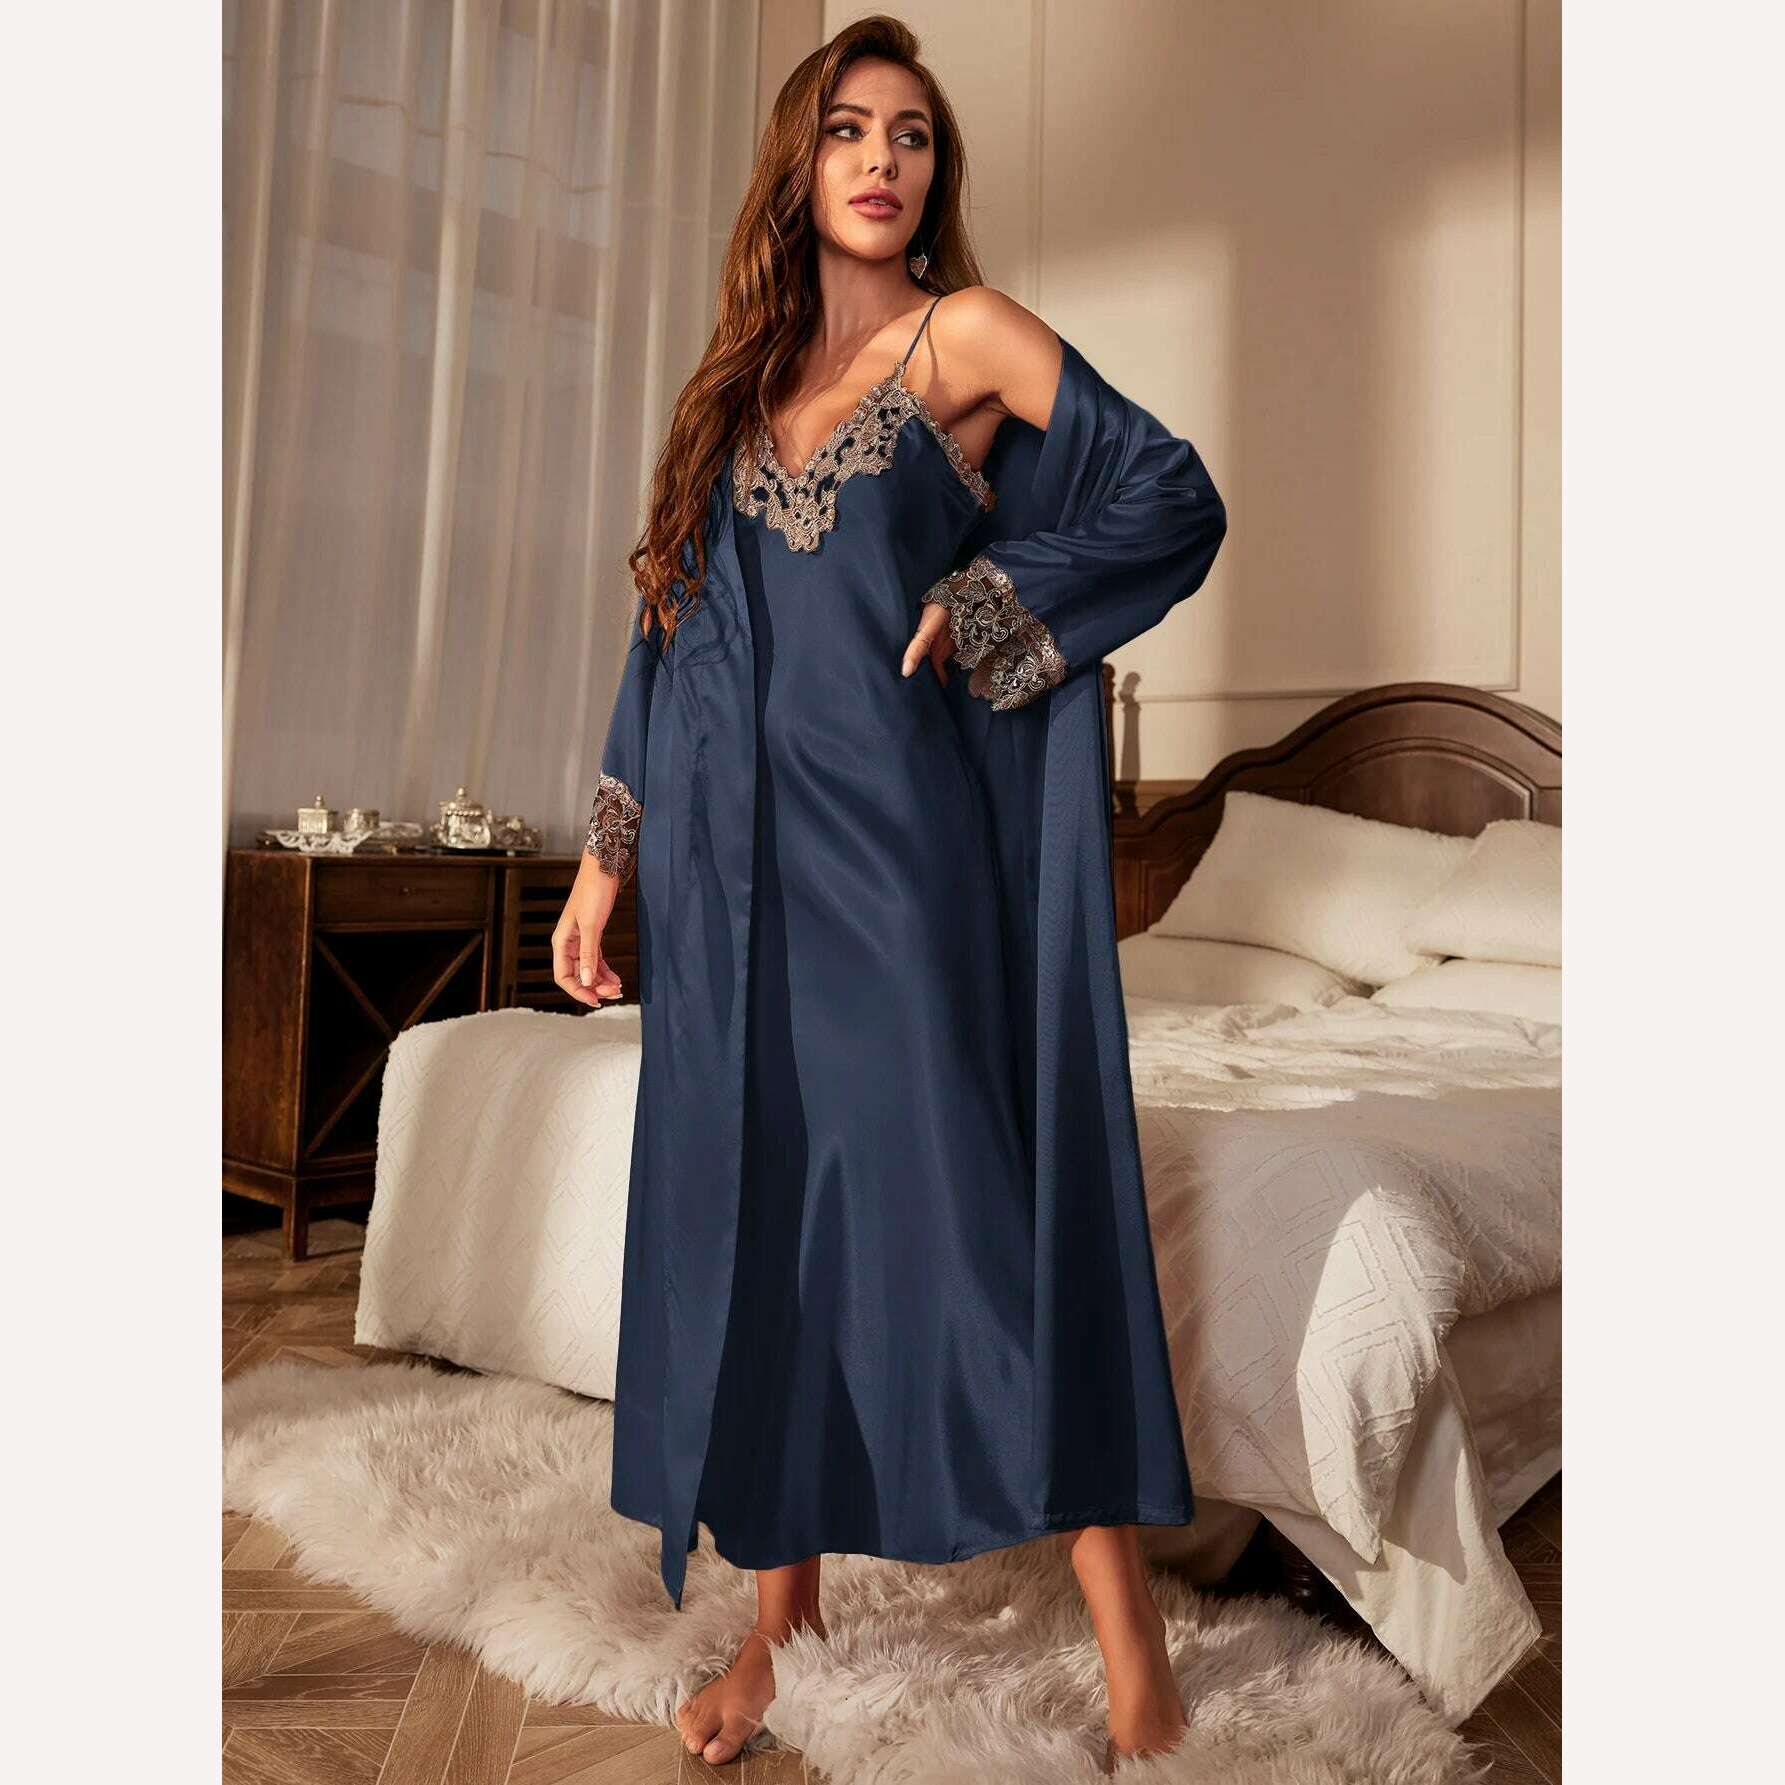 Contrast Lace Pajama Set Long Sleeve Robe With Belt  V Neck Slip Dress Women's Sleepwear  Loungewear, KIMLUD Women's Clothes